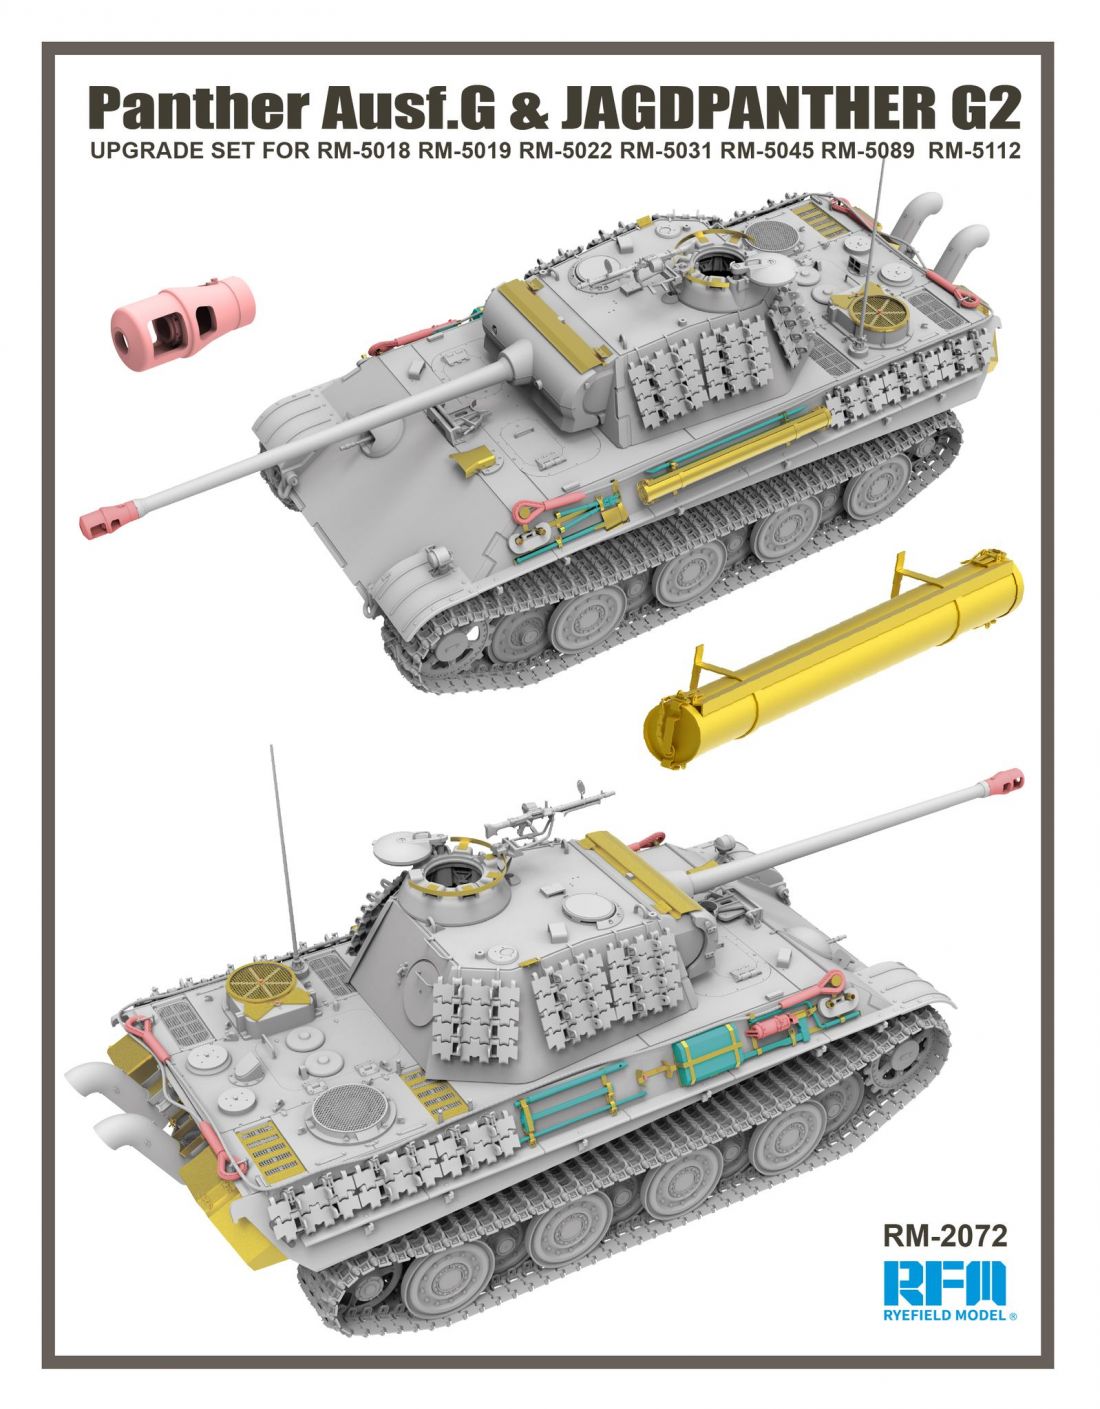 Rye Field Model RM-2072 - 1:35 Panther Ausf.G, Jagdpanther G2 upgr. set - Vorbe.